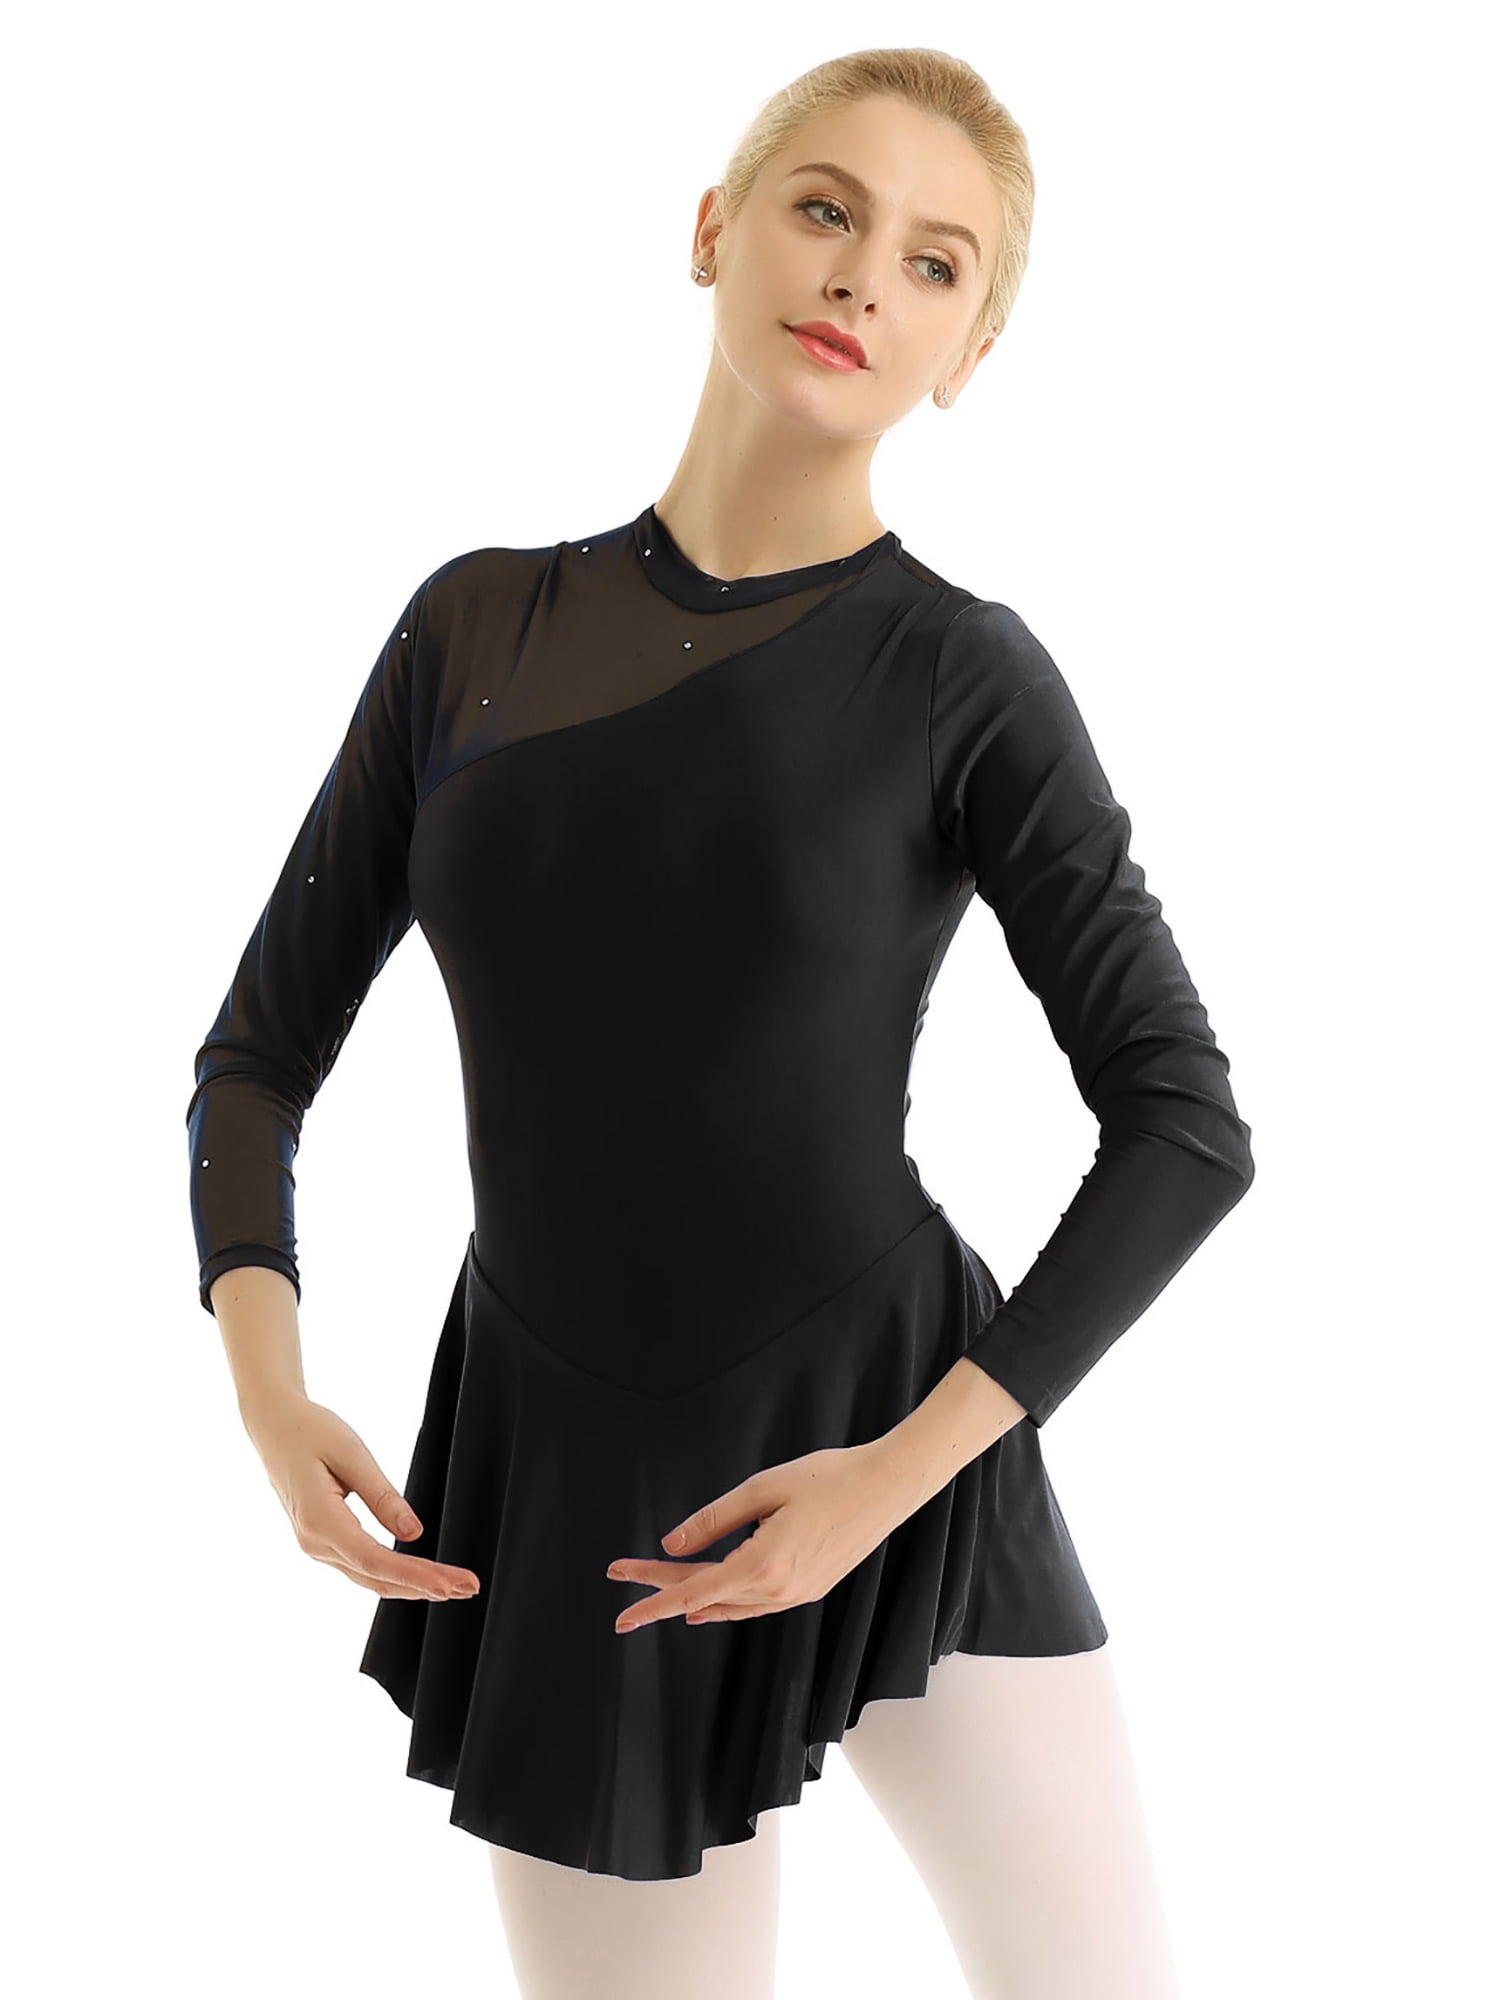 Women Adult Long Sleeve Figure Ice Skating Dress Dance Gymnastics Leotard Dress 